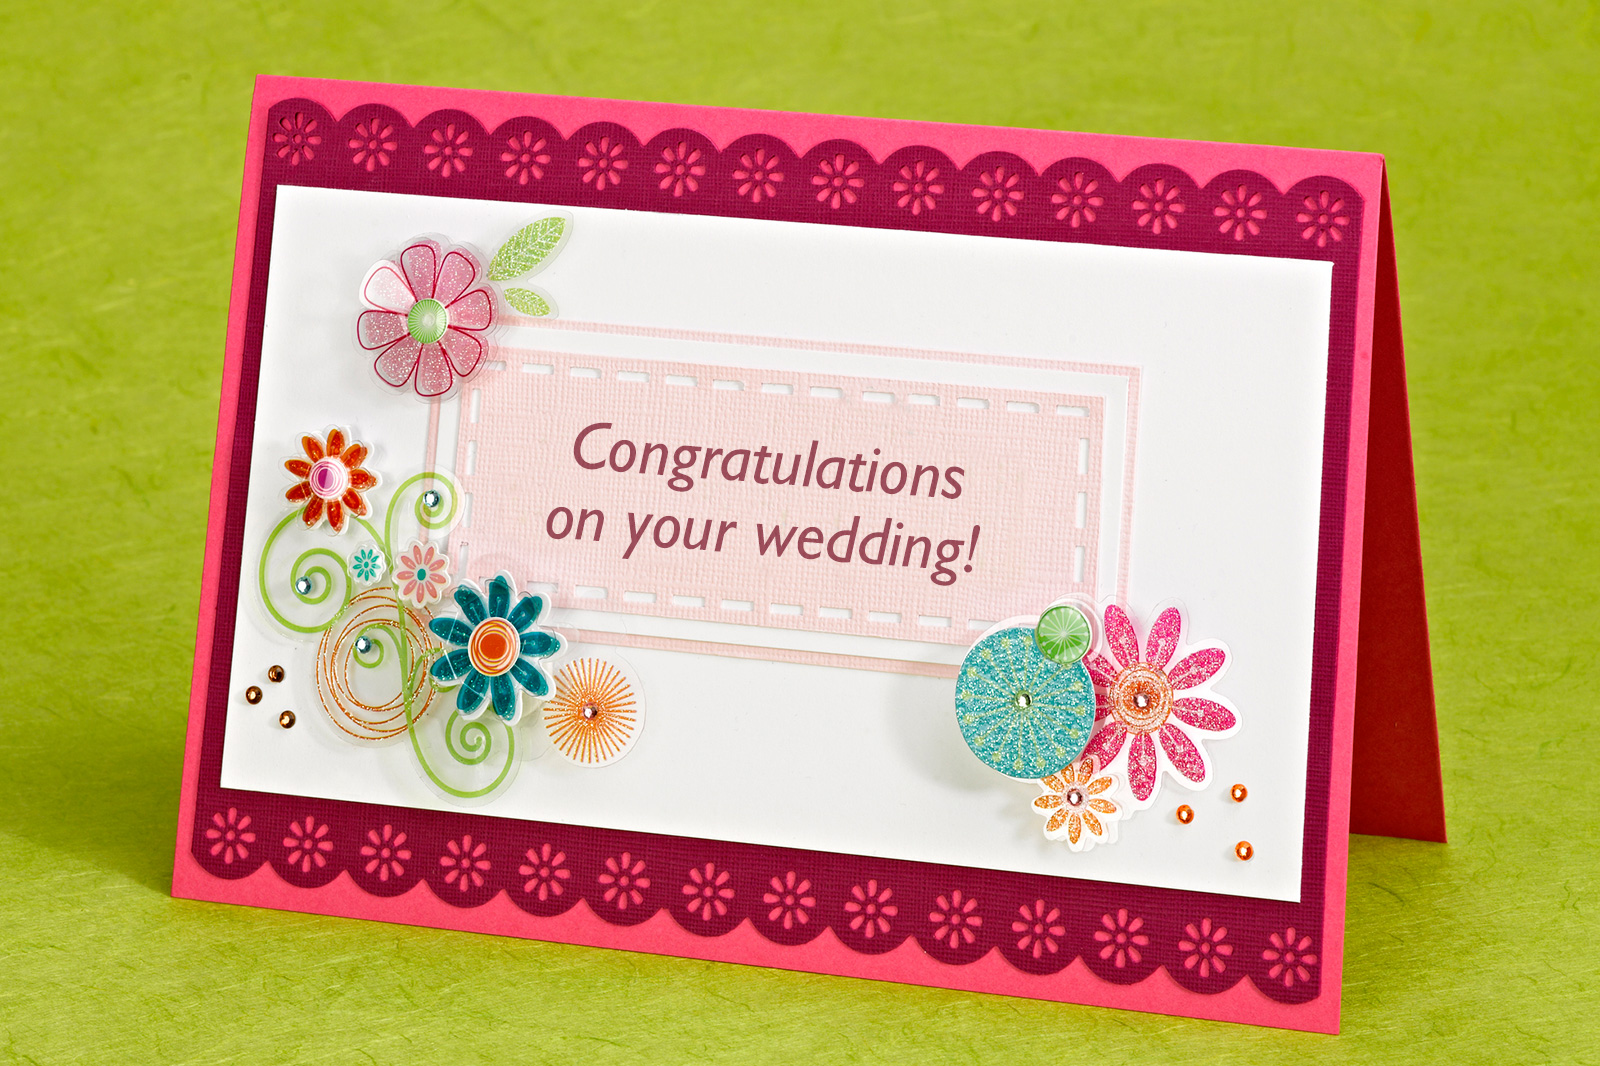 662-1600x1066-congratulations-on-your-wedding-card.jpg